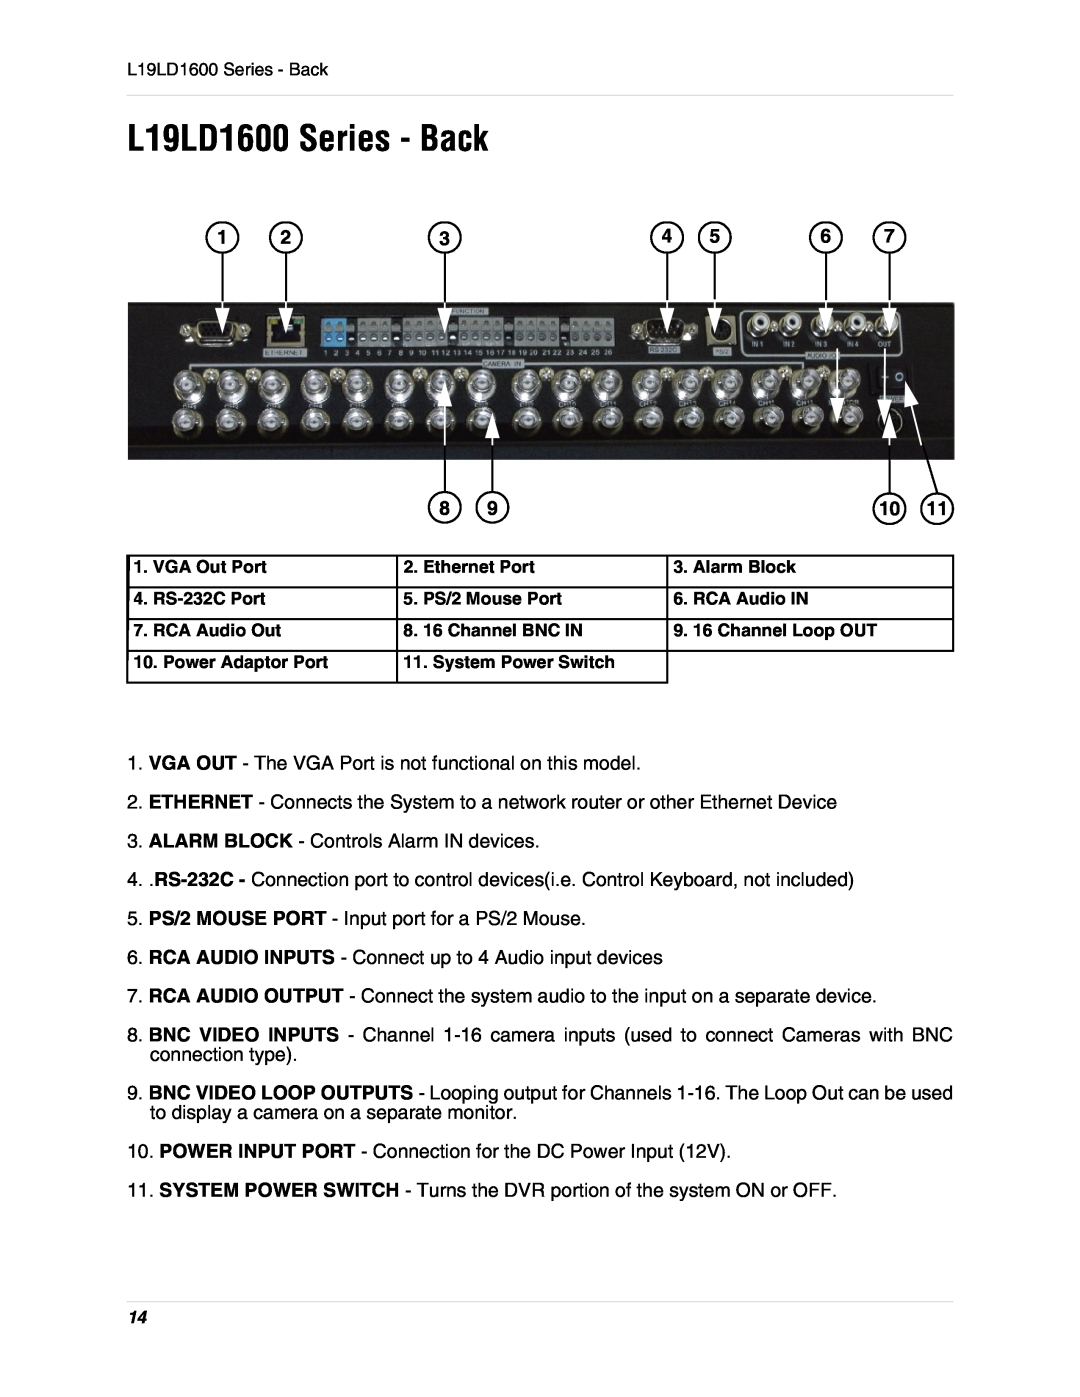 LOREX Technology L19lD1616501 instruction manual L19LD1600 Series - Back 